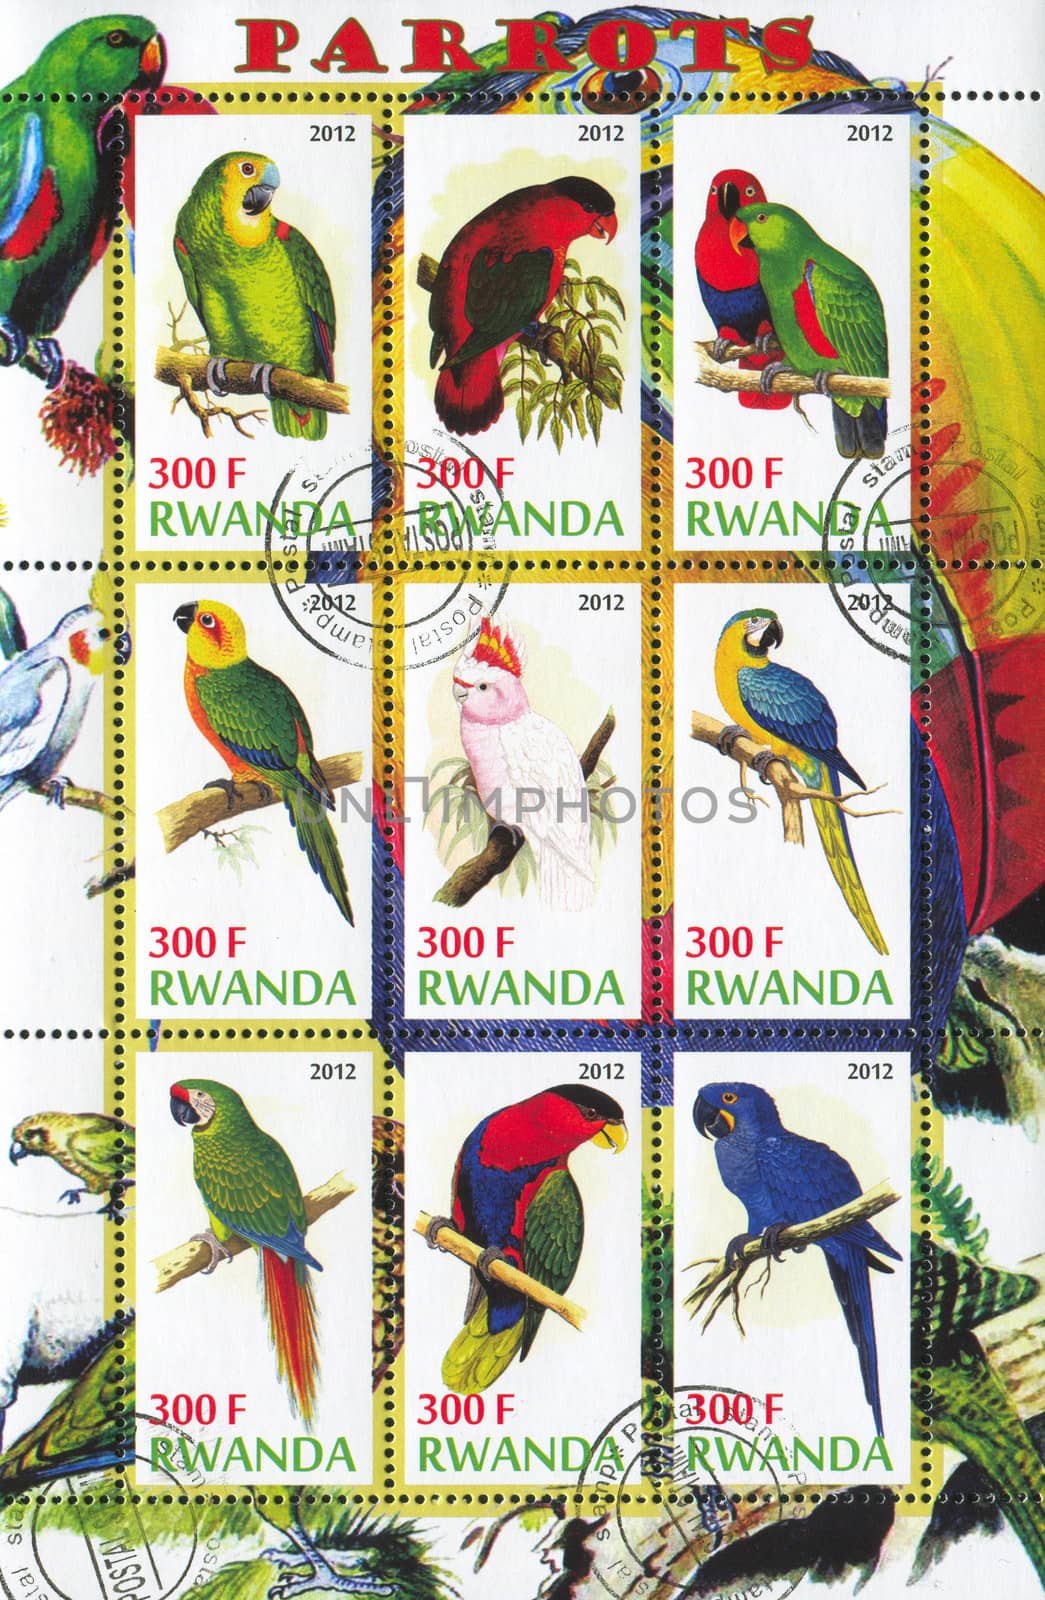 RWANDA - CIRCA 2012: stamp printed by Rwanda, shows Parrot, circa 2012